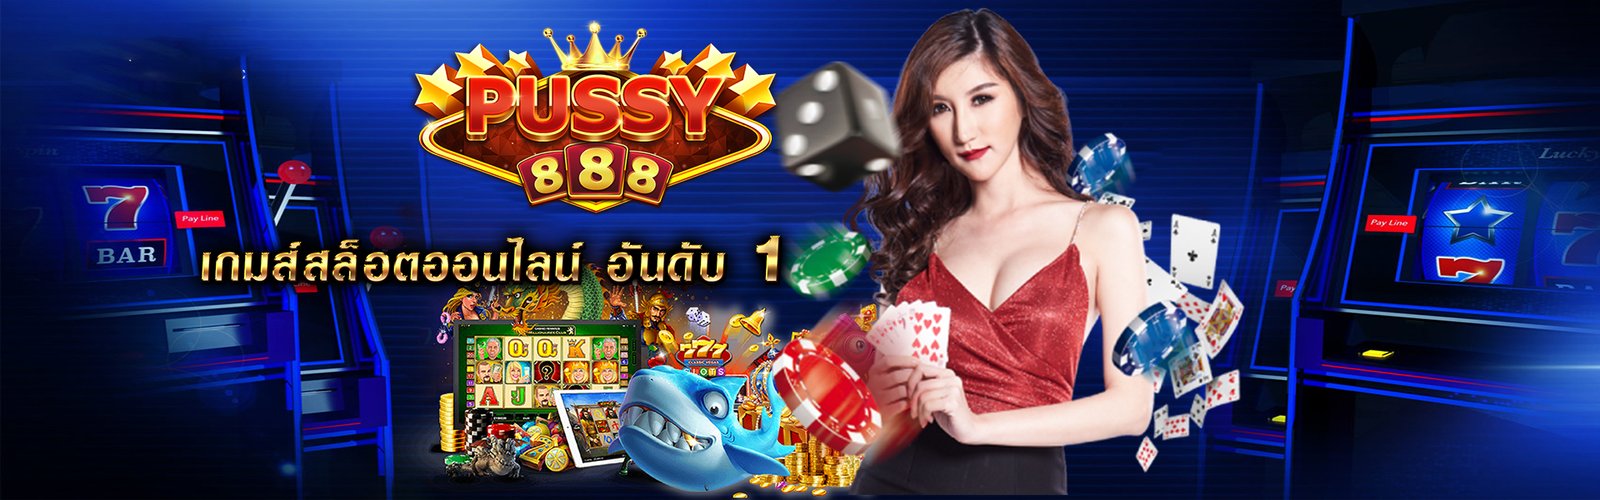 Pussy888-BIGWIN369-ทางเข้า-10